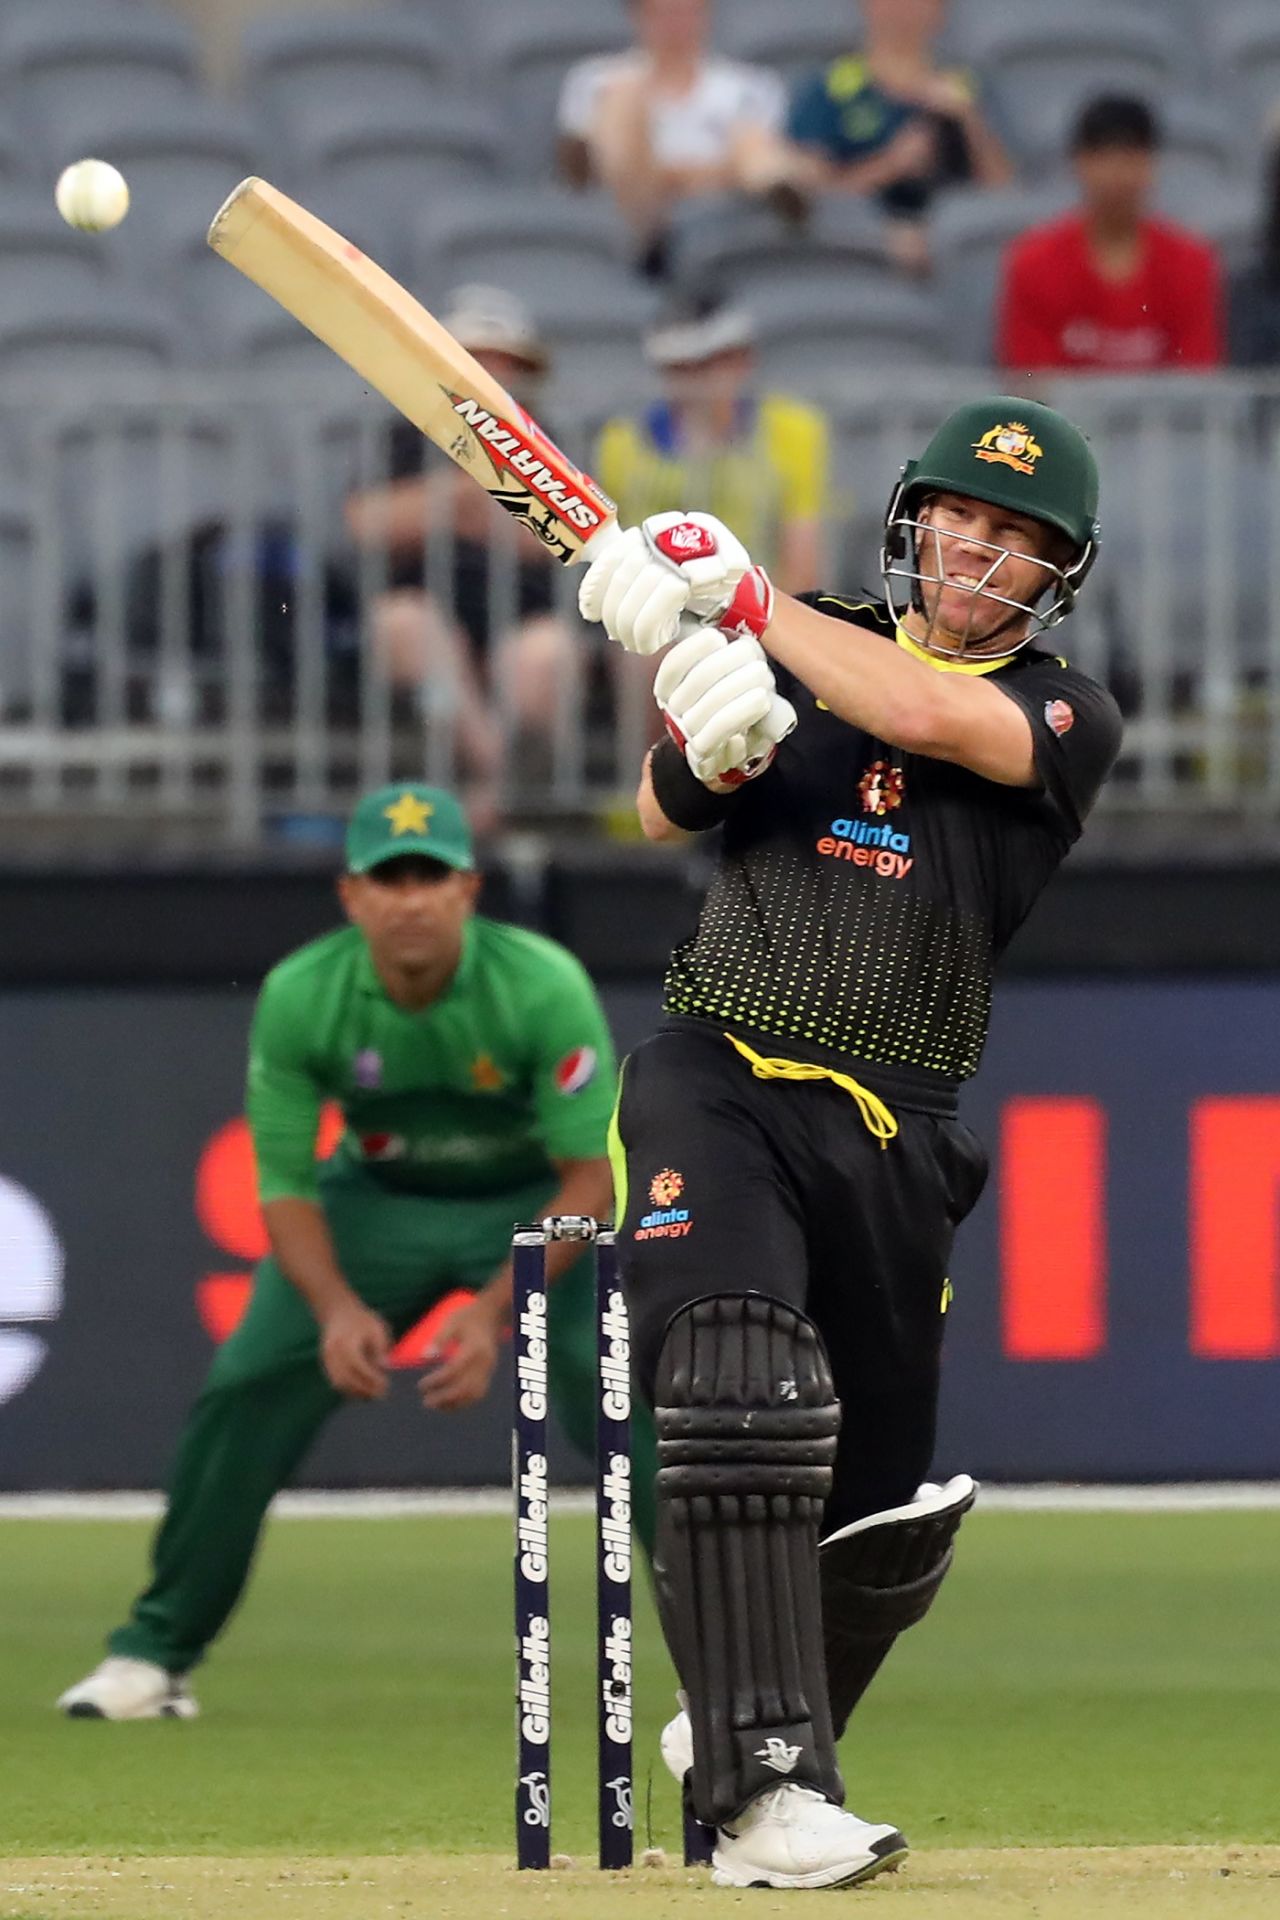 David Warner gets Australia off to a flying start, Australia v Pakistan, 3rd T20I, Perth, November 8, 2019

